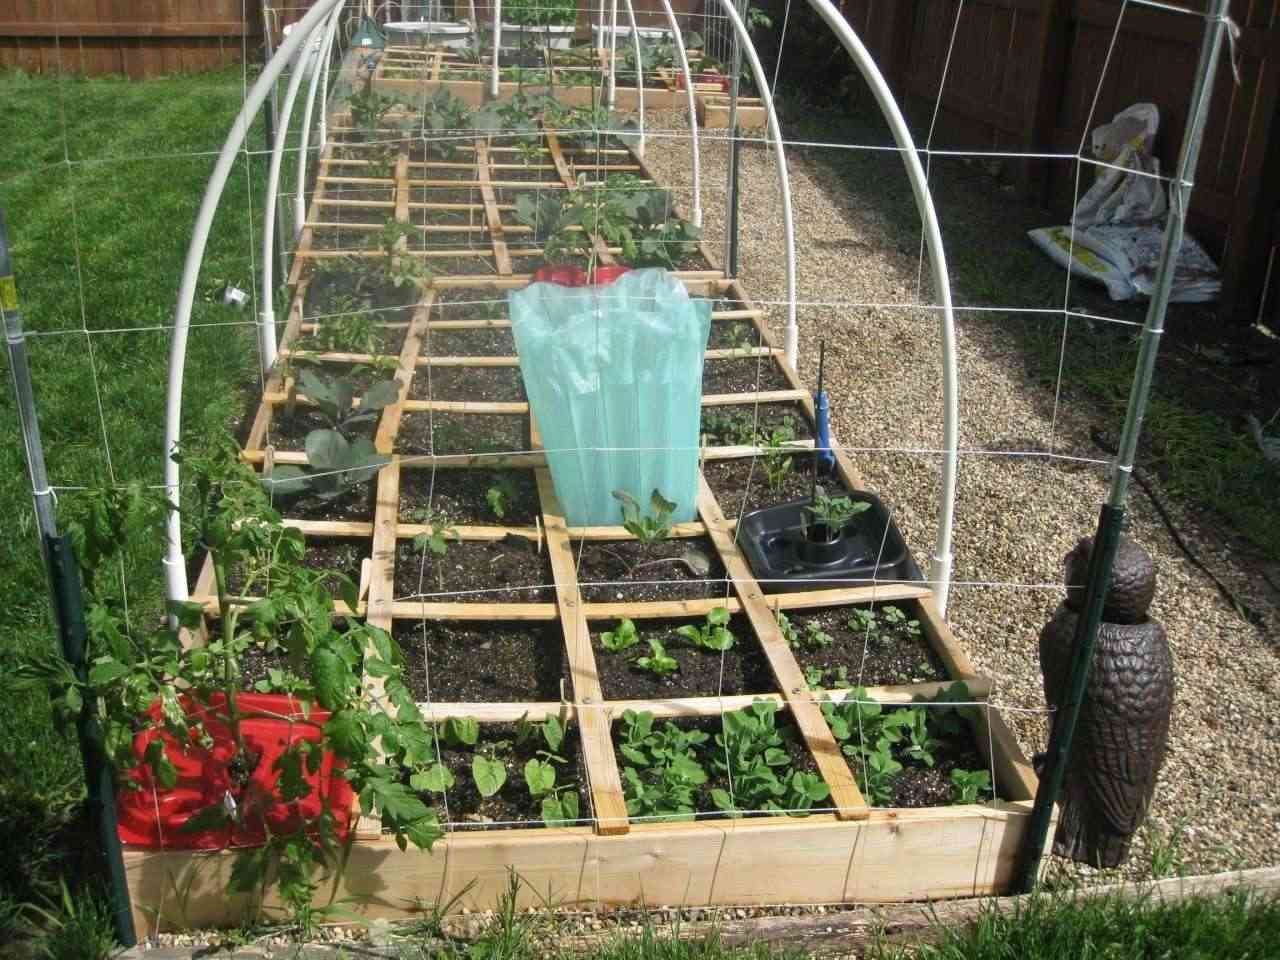 strawberries - My transformed row garden to a beautiful SFG Img_4518